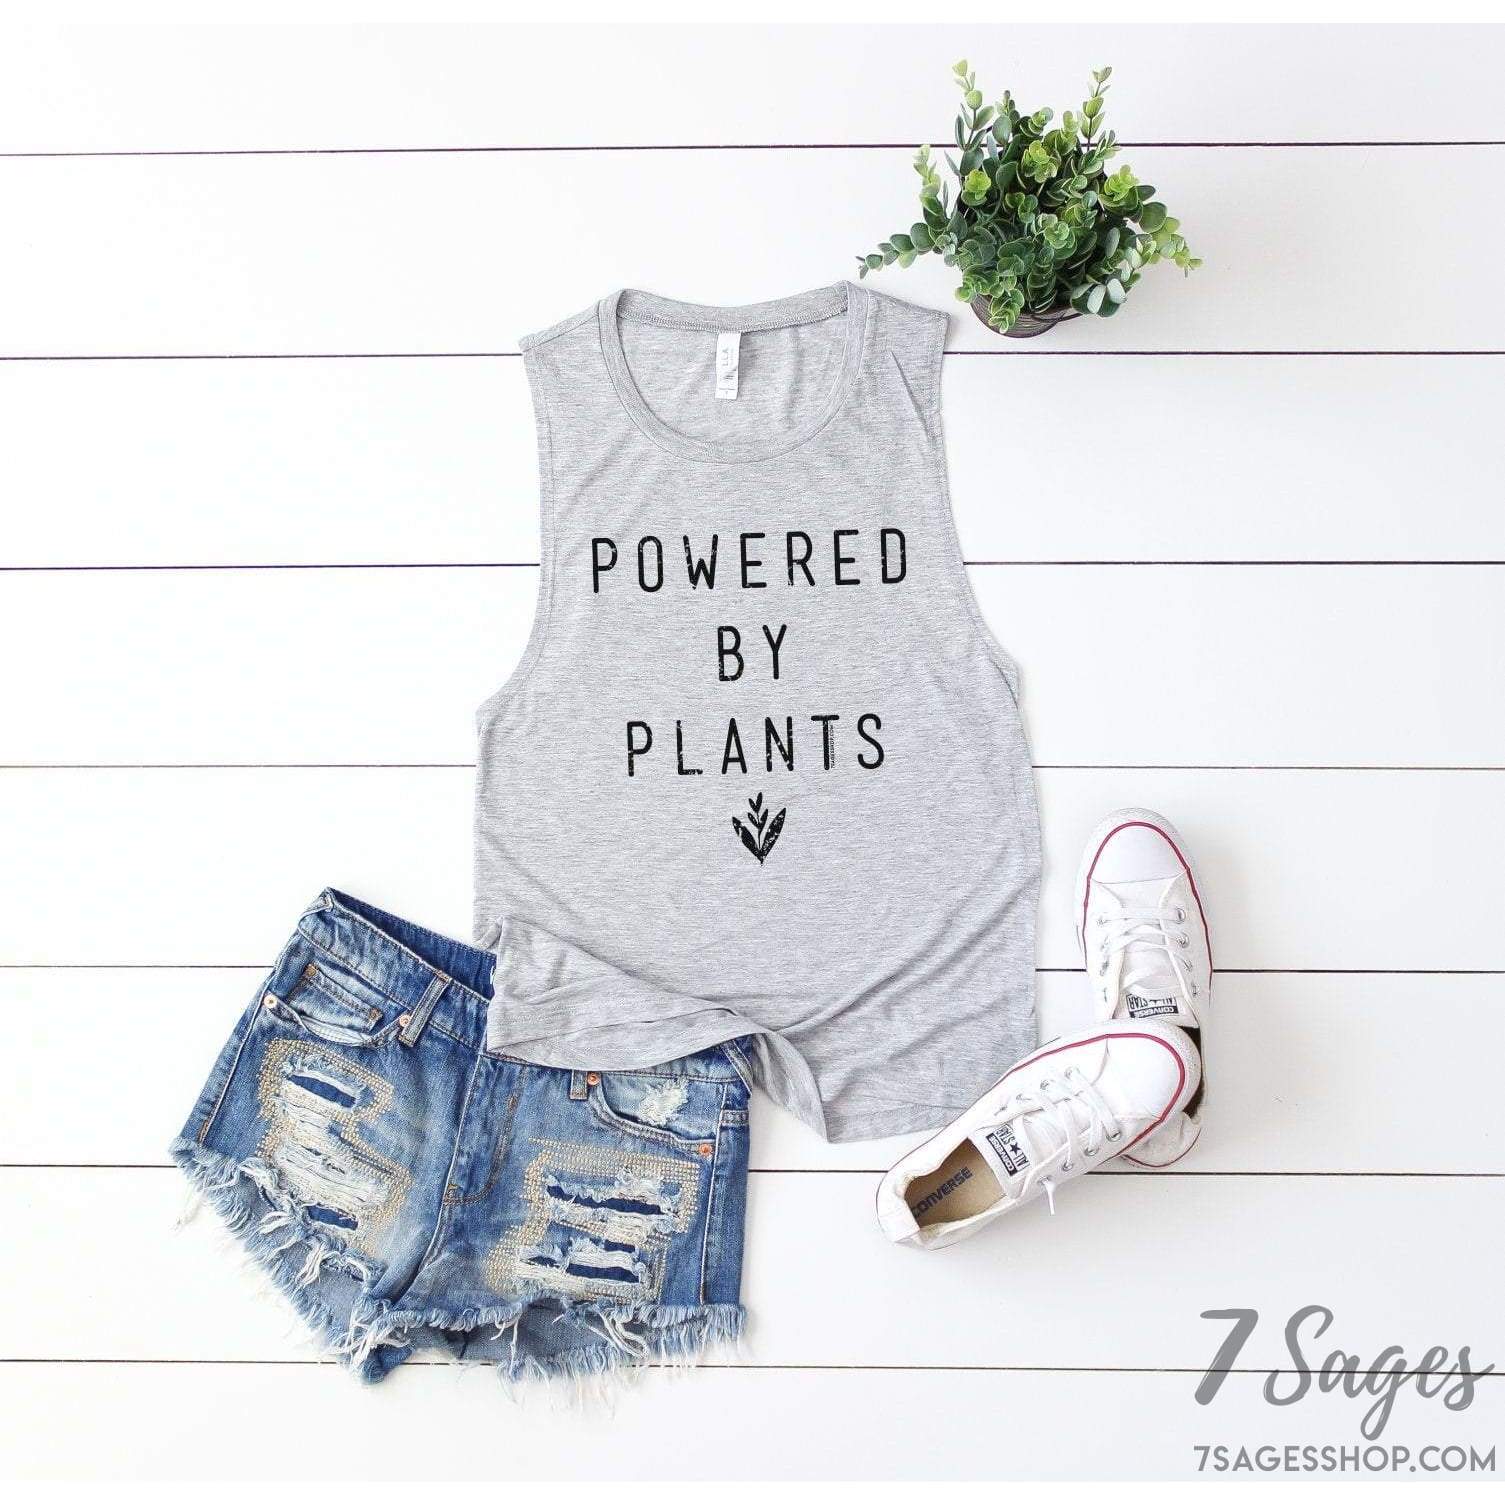 Powered by Plants Muscle Tank Top - Vegan Tank Top - Vegetarian Shirt - Vegan Shirt - Vegan Muscle Tank Top - Powered by Plants